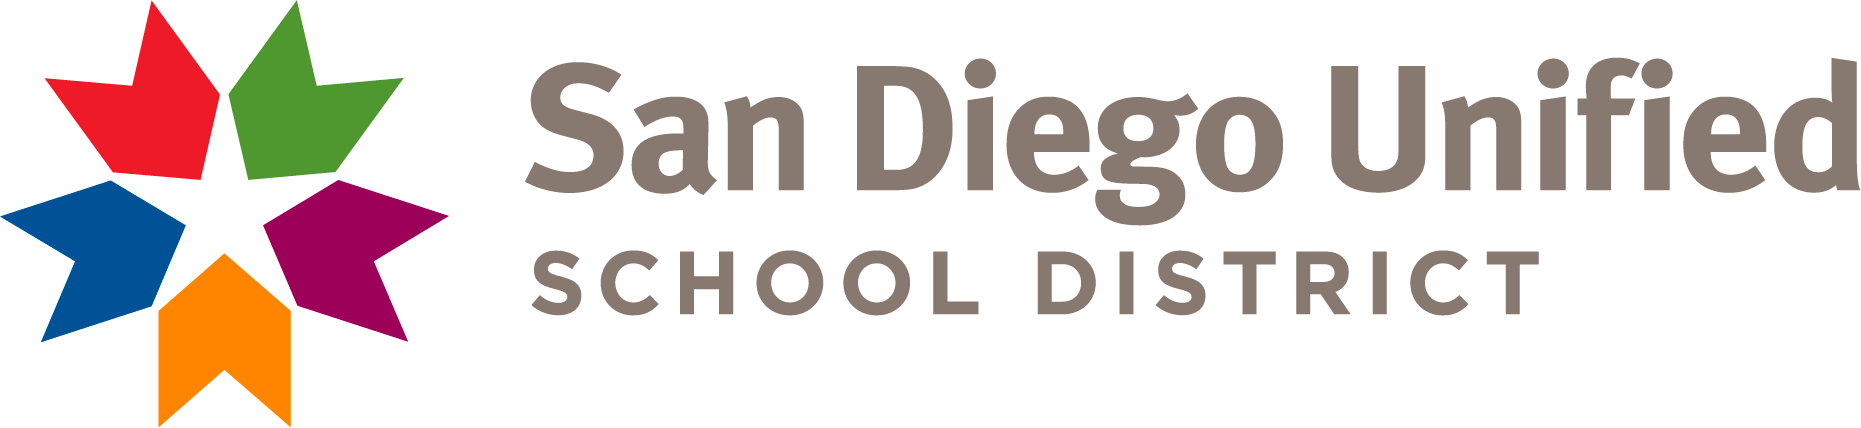 San Diego Unified School District Logo